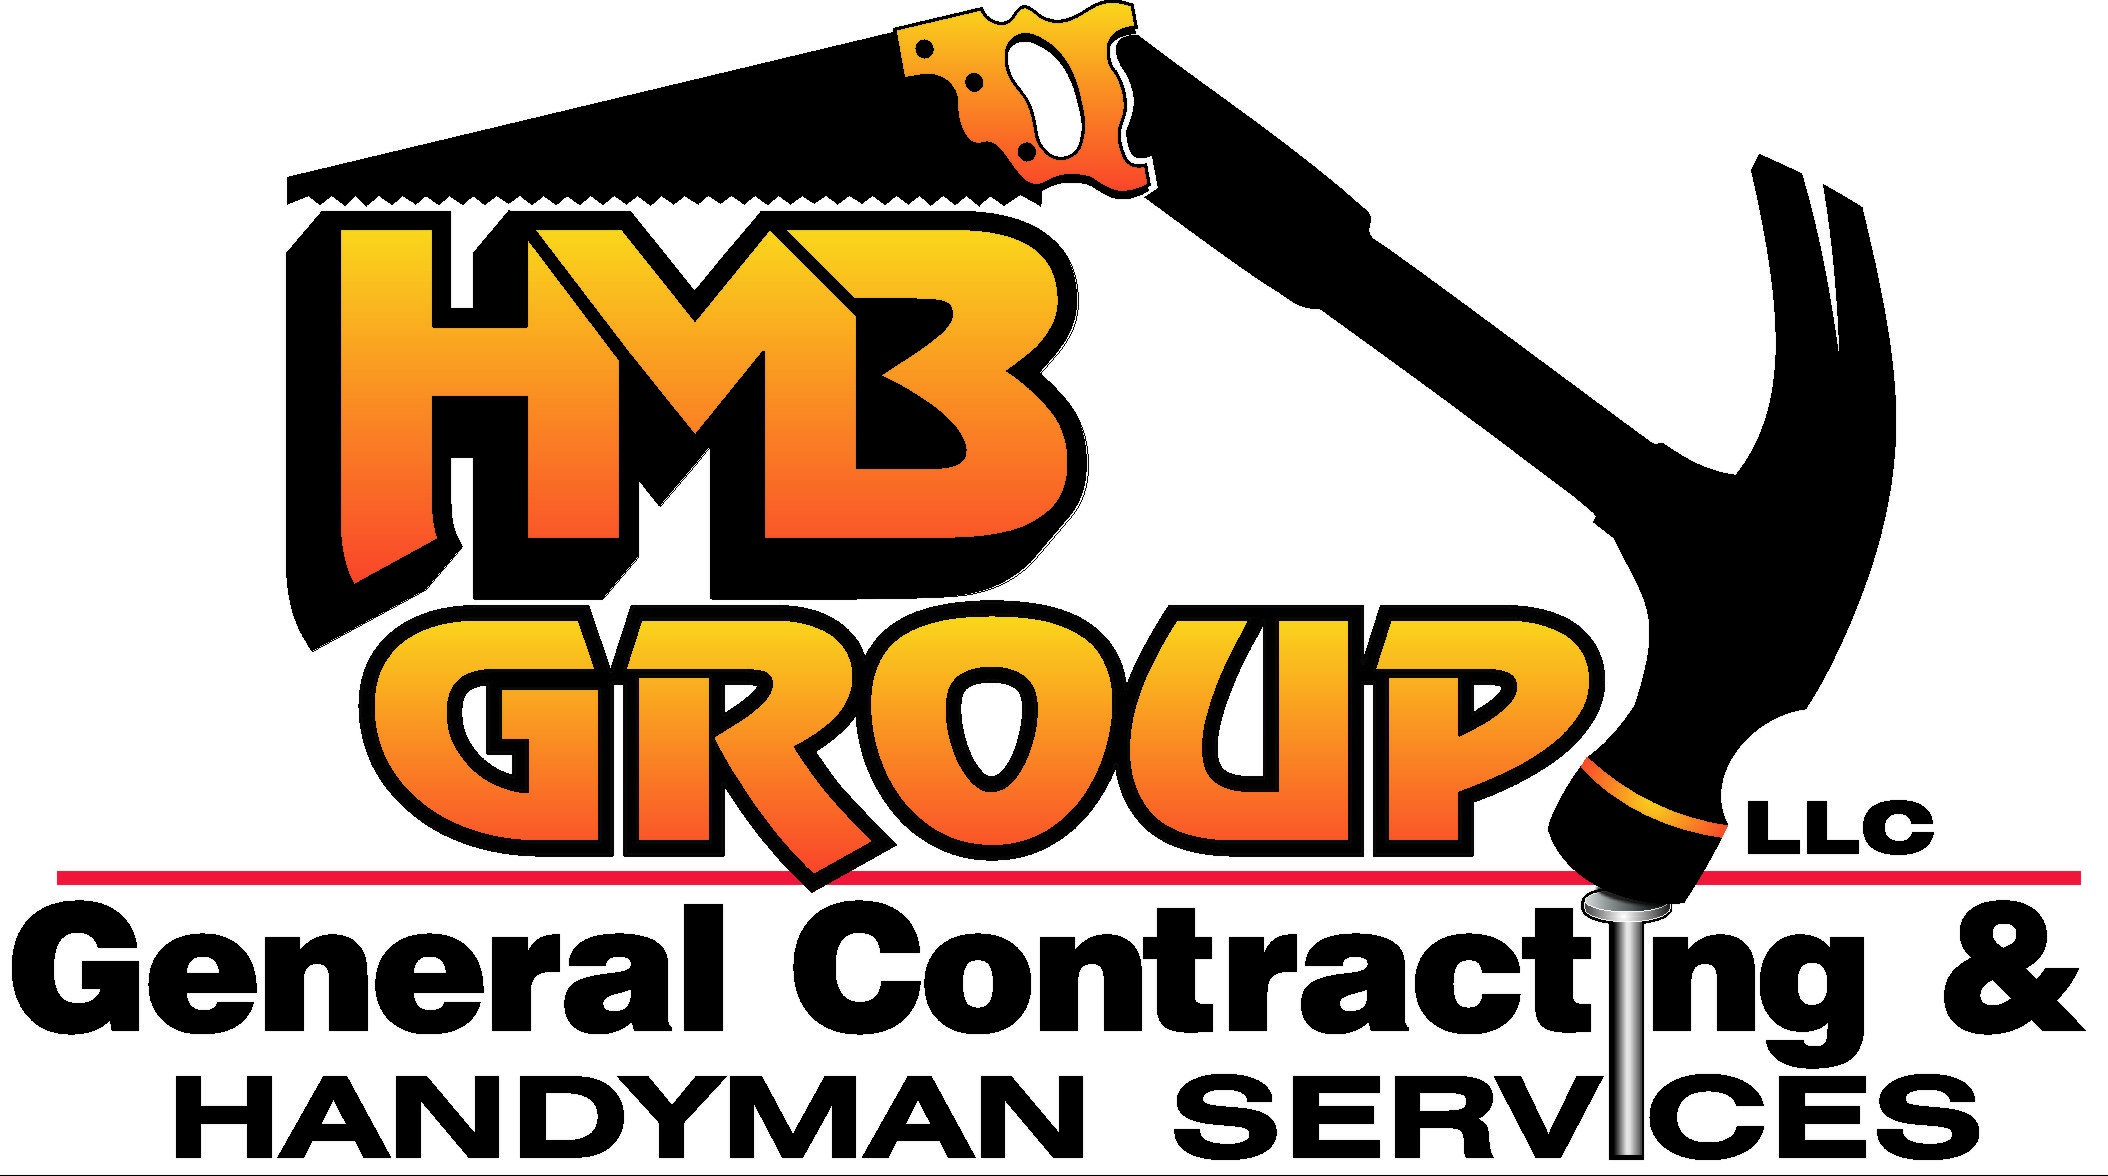 HMB Group General Contracting, LLC Logo